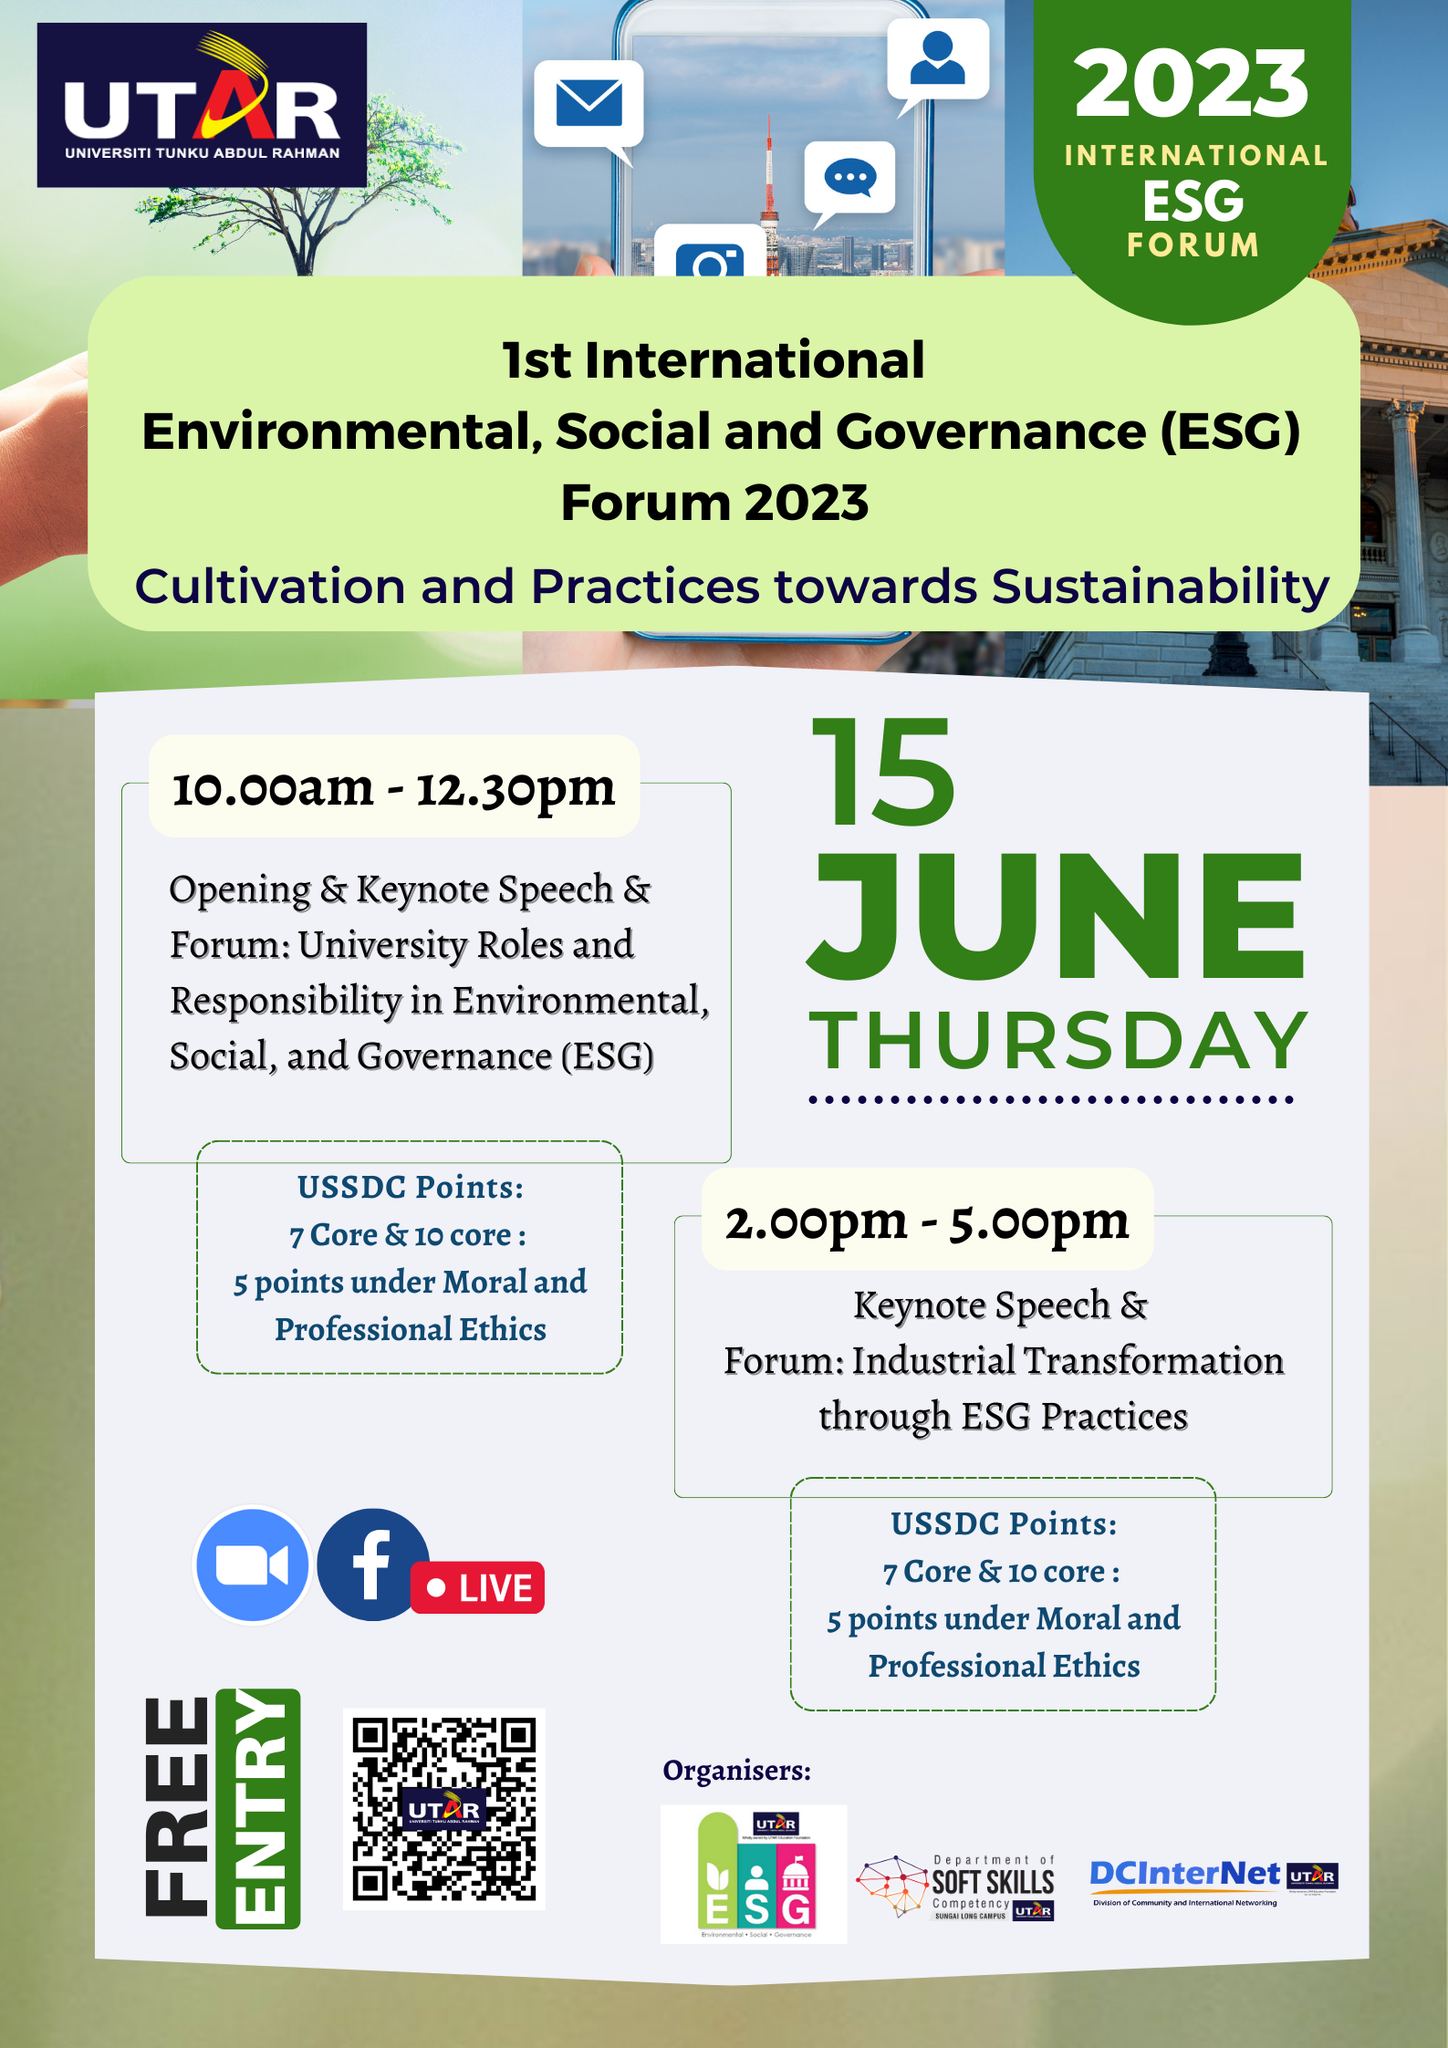 The 1st International Environmental, Social, and Governance (ESG) Forum 2023